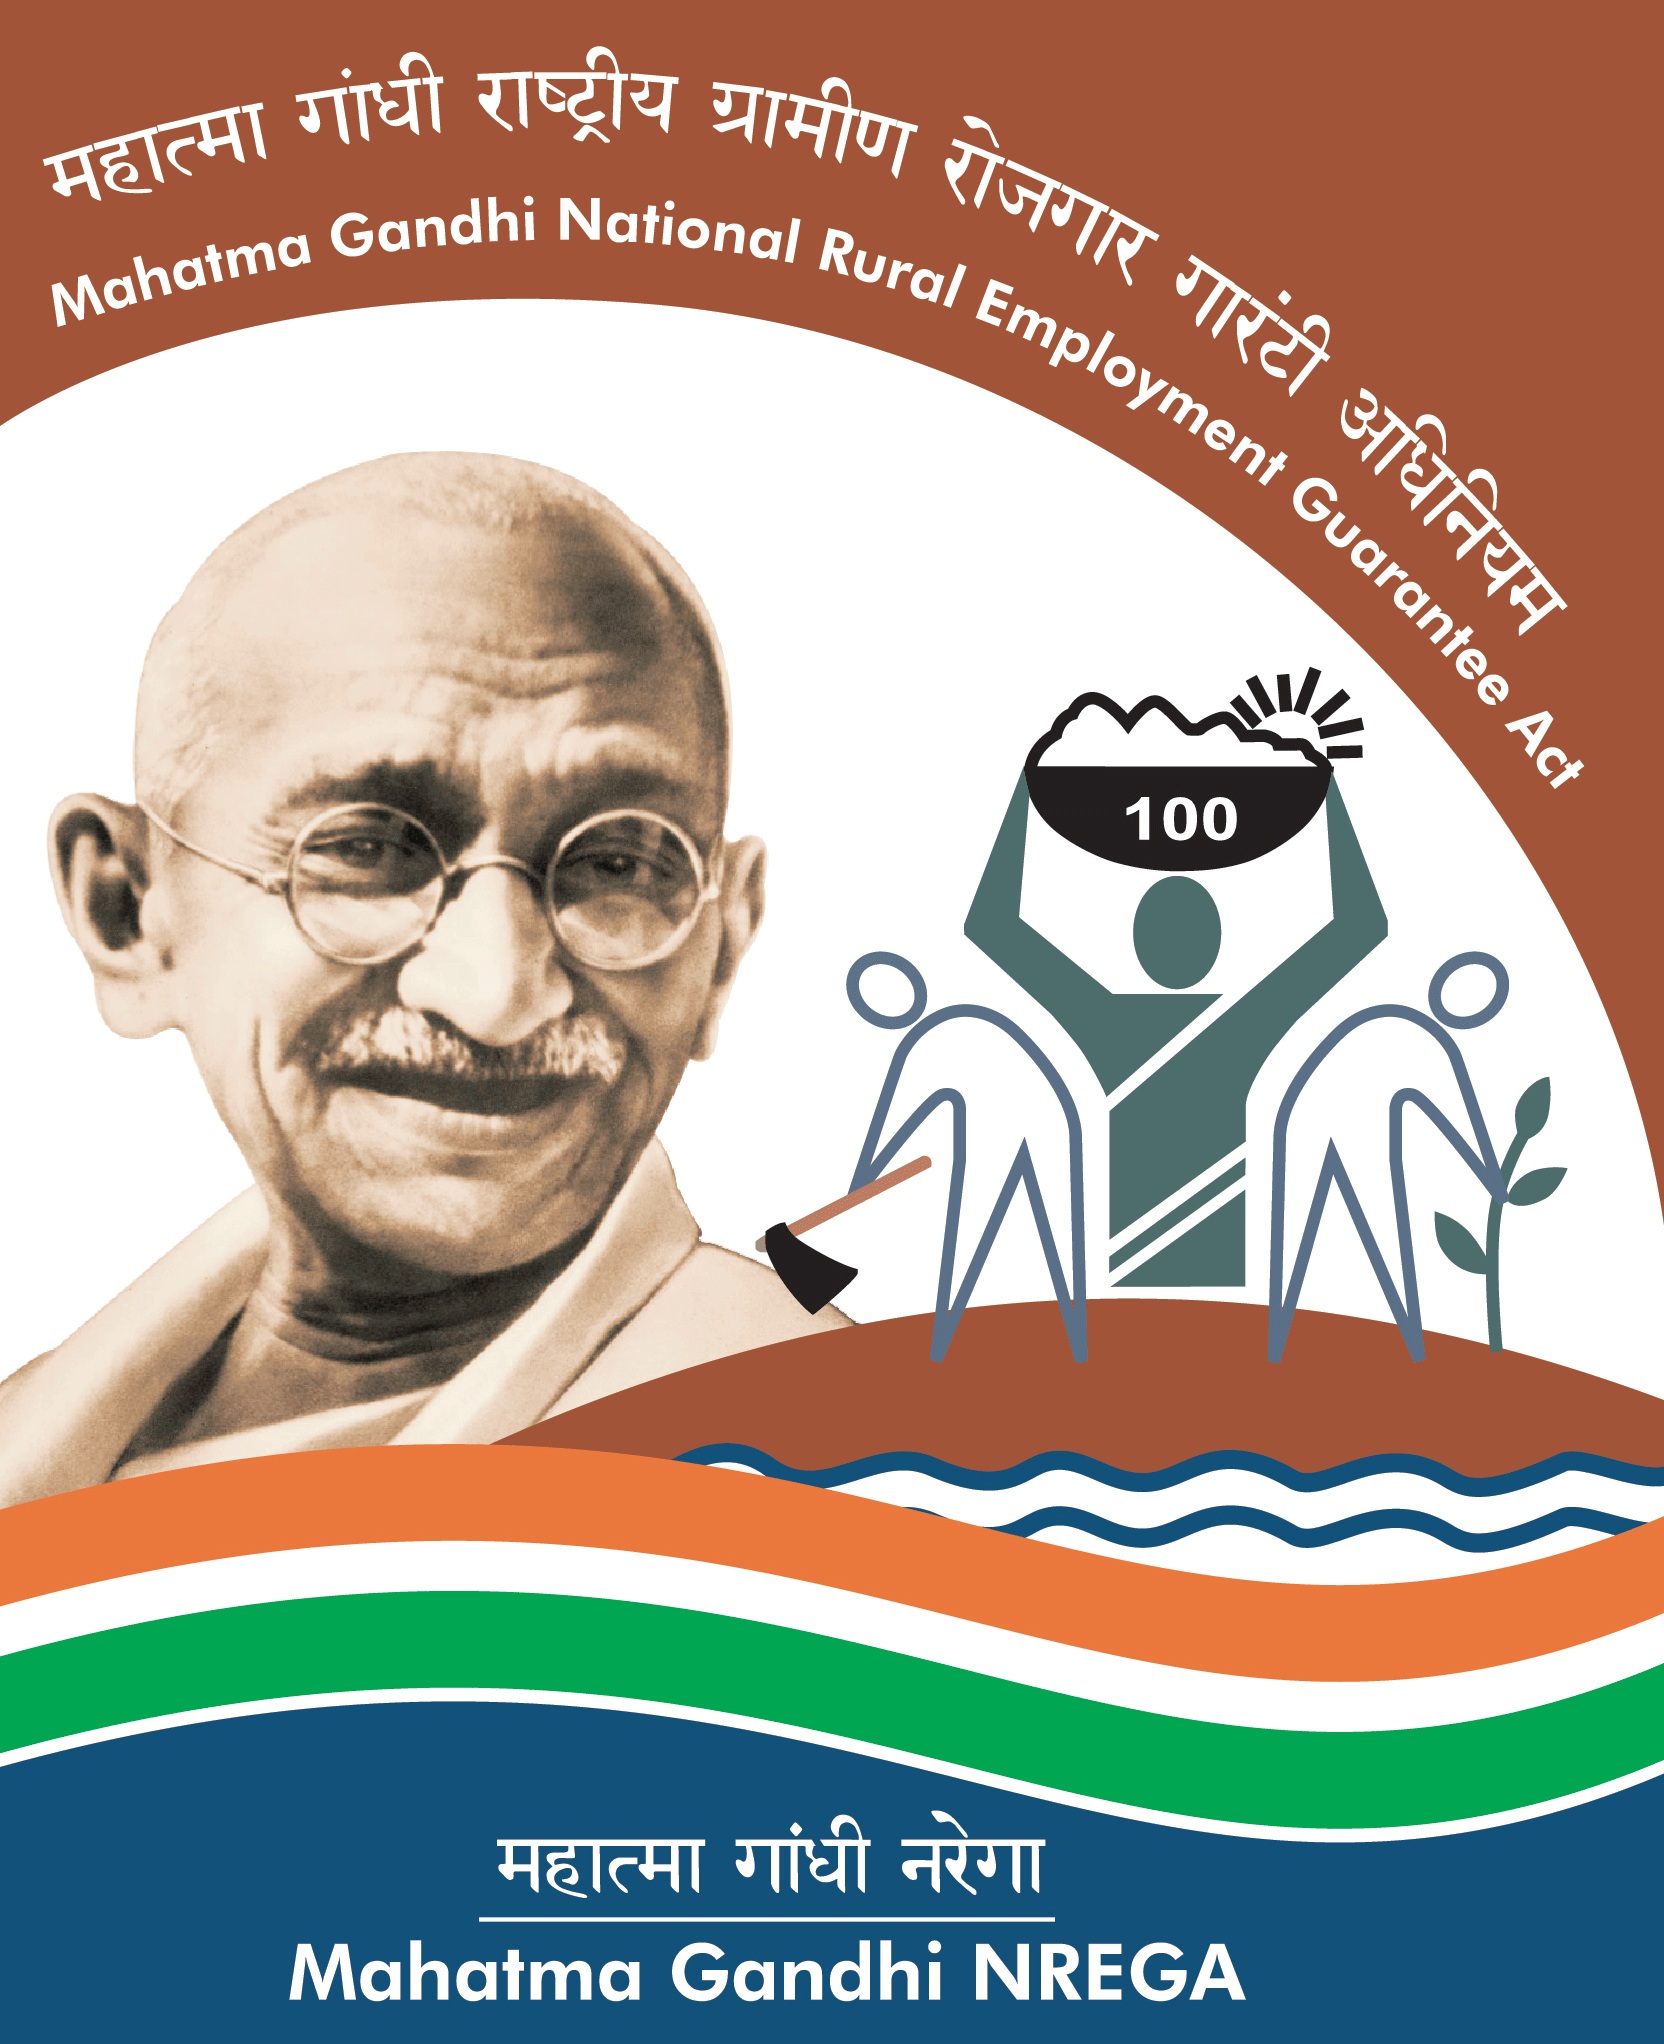 MAHATMA  GANDHI  NATIONAL  RURAL  EMPLOYMENT GUARANTEE   SCHEME  (MGNREGS)  IN  GULBARGA  DISTRICT.